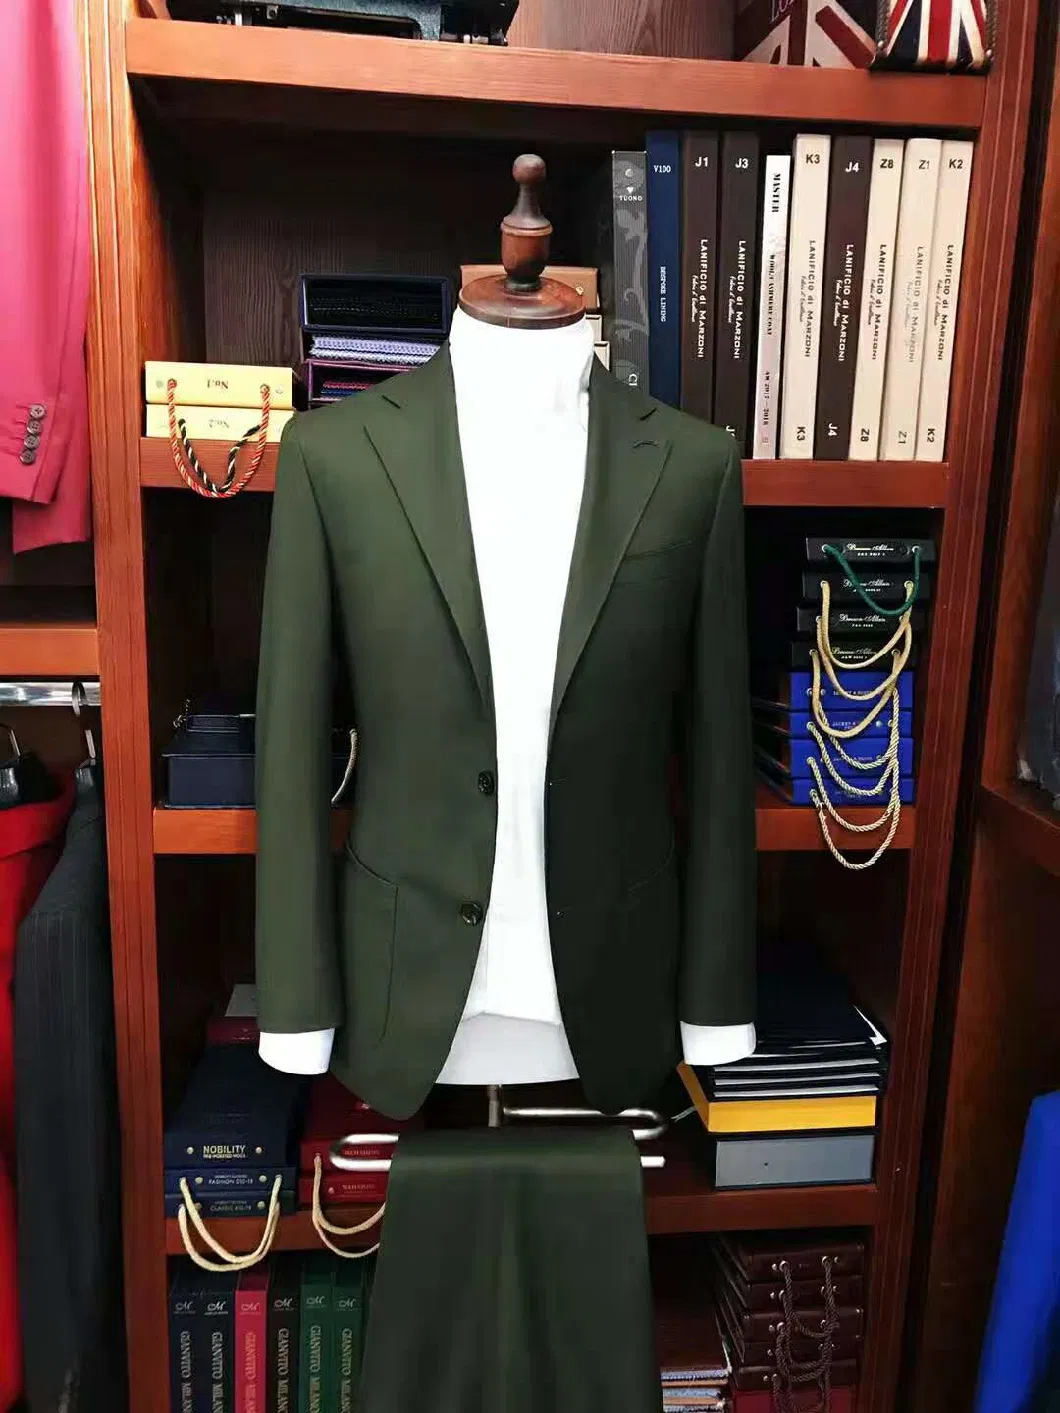 Mens 2 Piece Floral Tuxedo Jacket Paisley Shawl Lapel Suit Blazer Jacket